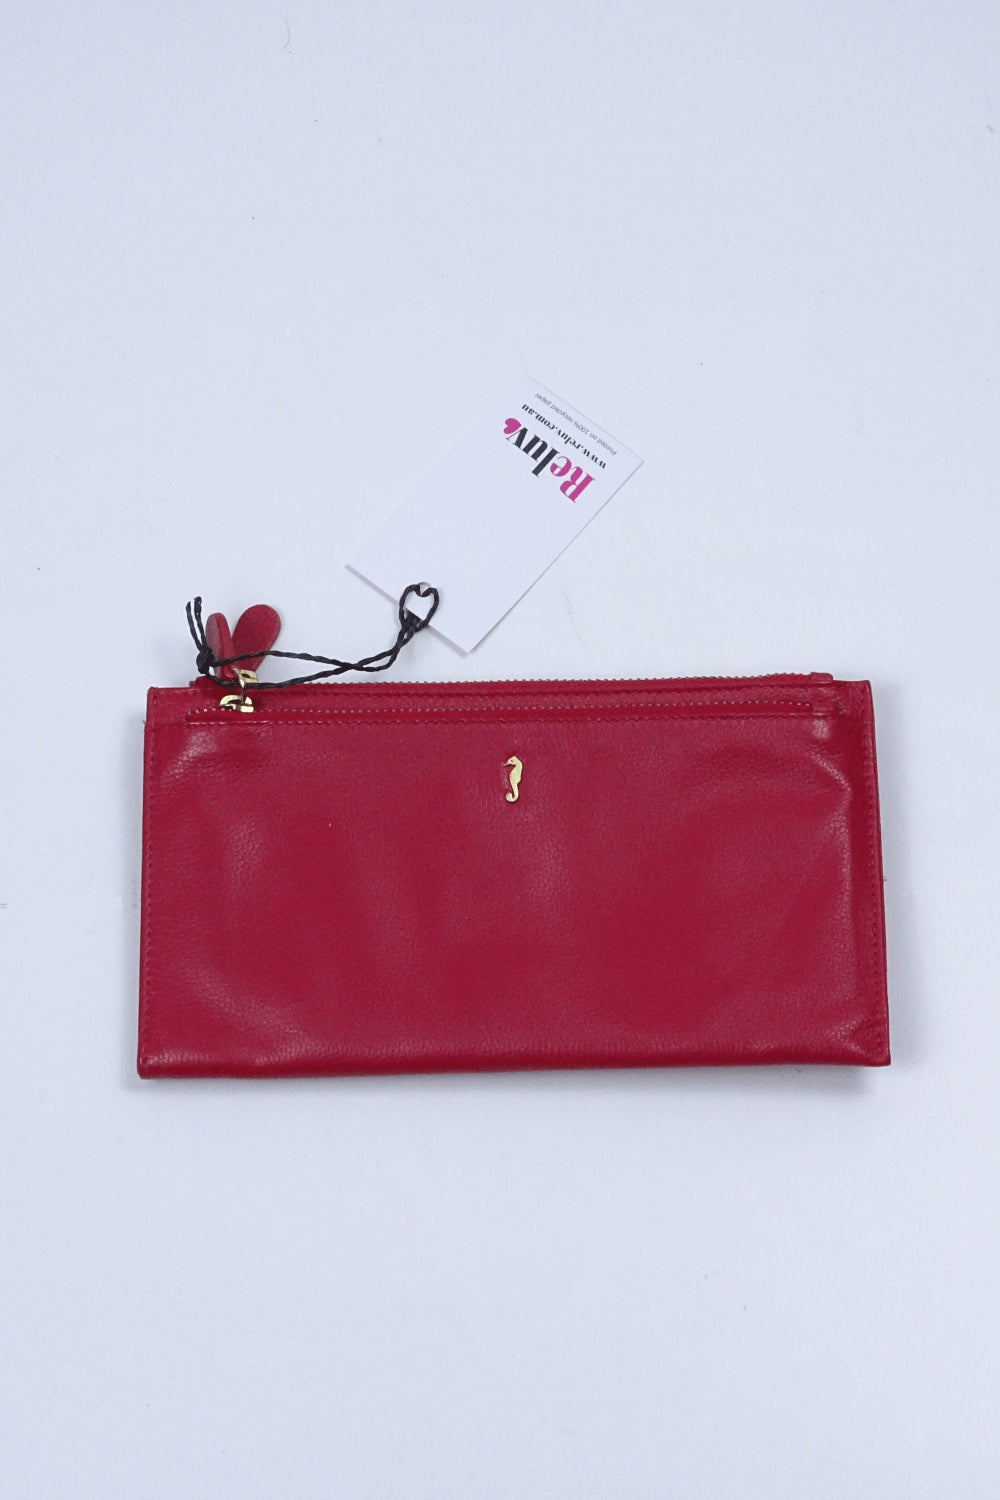 Kate Spade New York Cobble Hill Toddy Shoulder Bag Leather Red Purse Handbag  | eBay